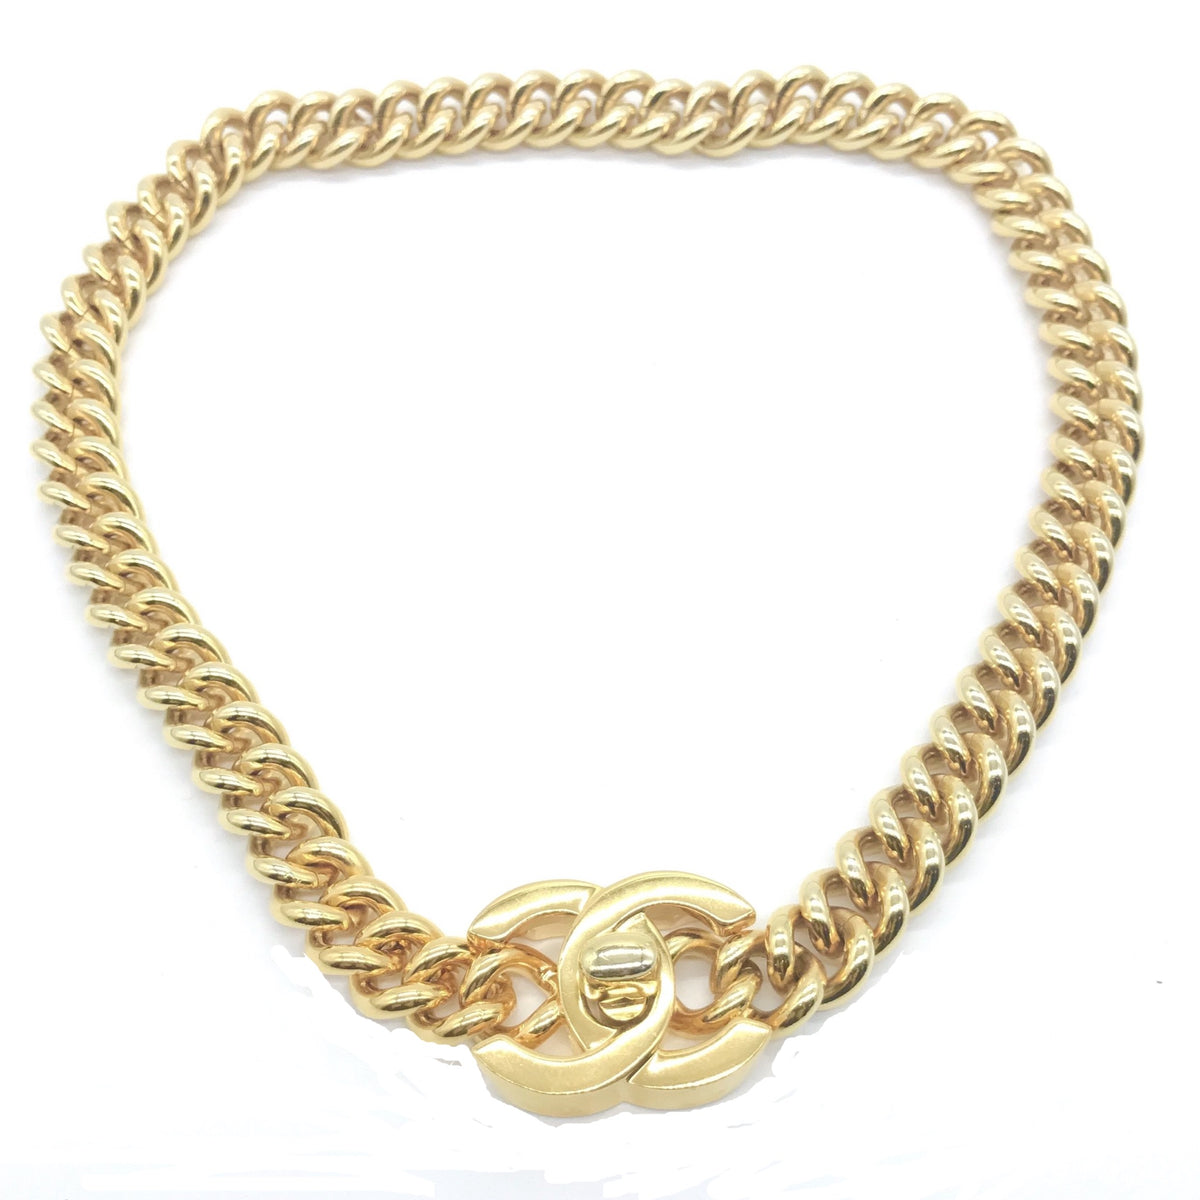 Vintage Chanel Goldtone Turnlock Necklace – Very Vintage